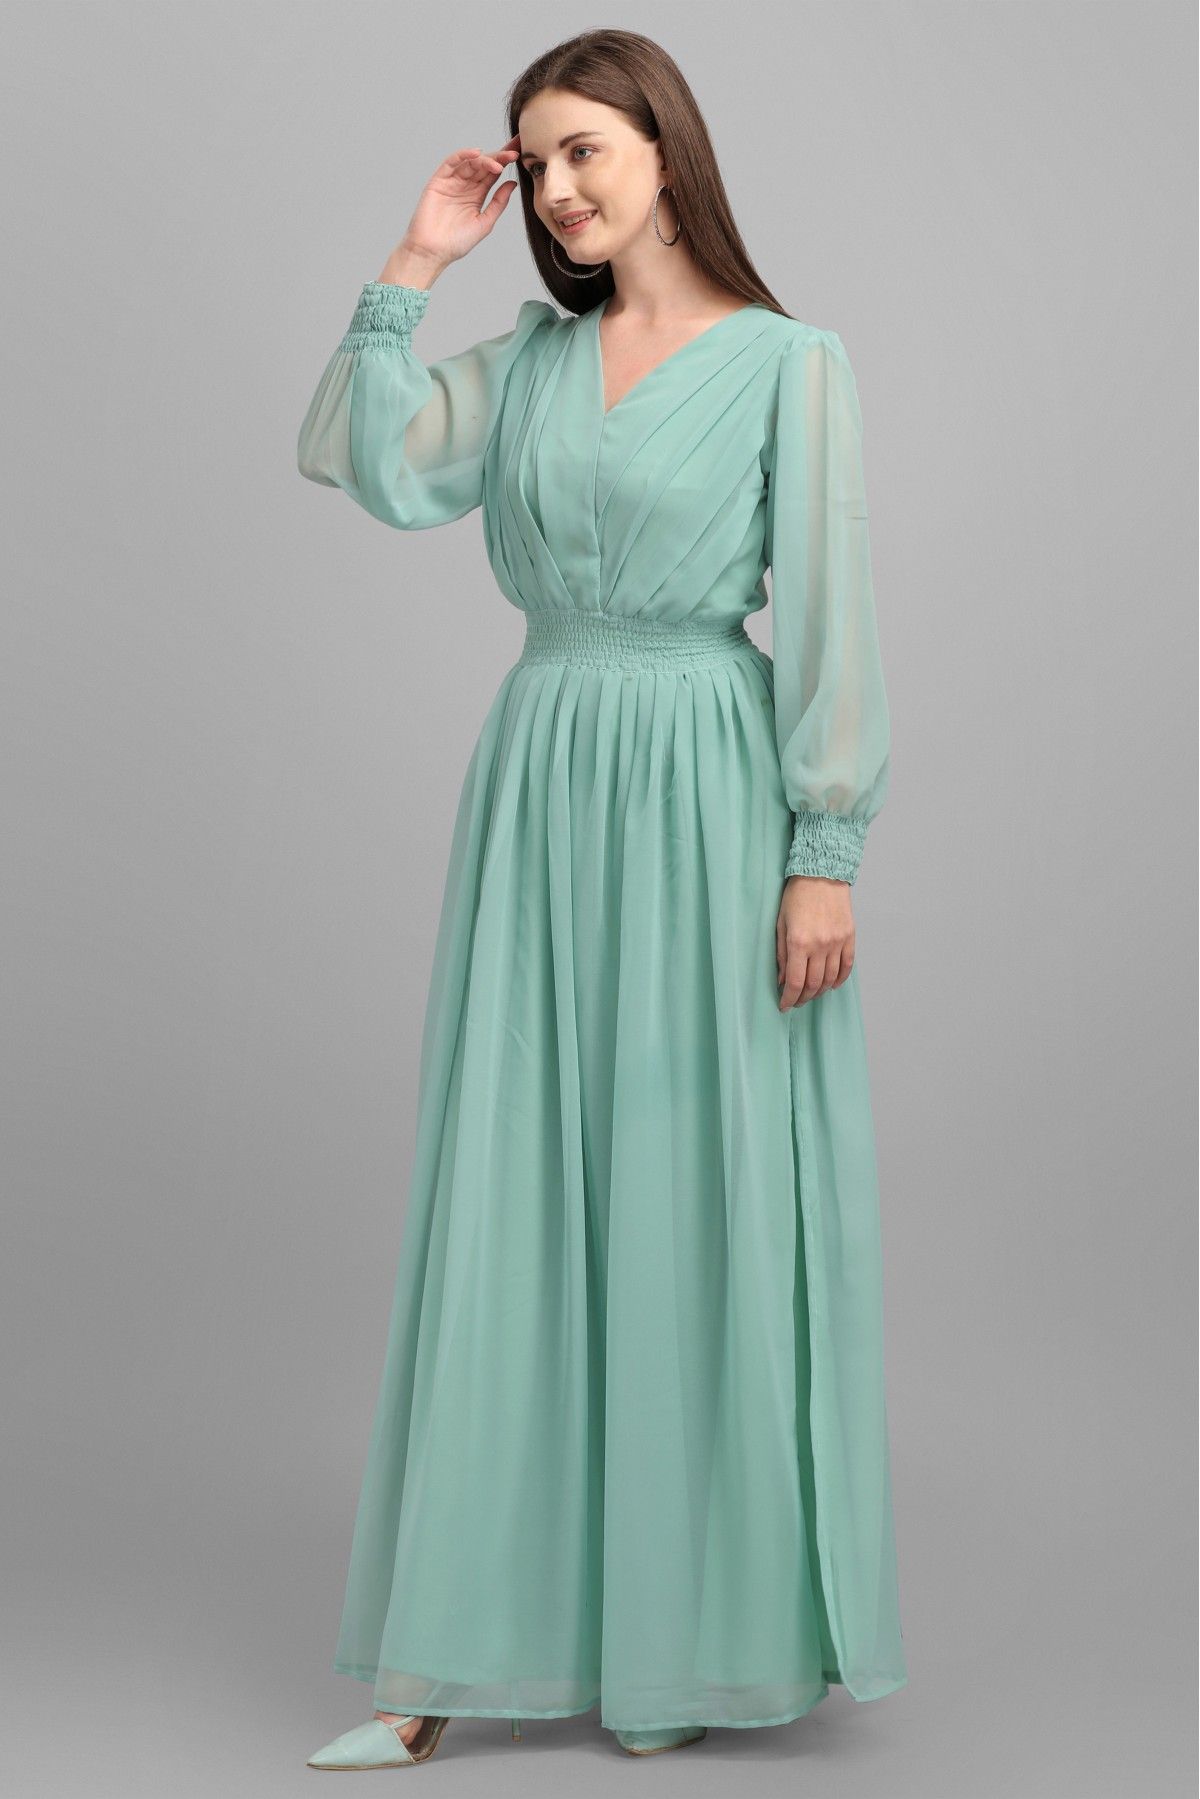 Pista Green Colour Combination Dresses || pista colour contrast dresses | pista  colour dress designs - YouTube